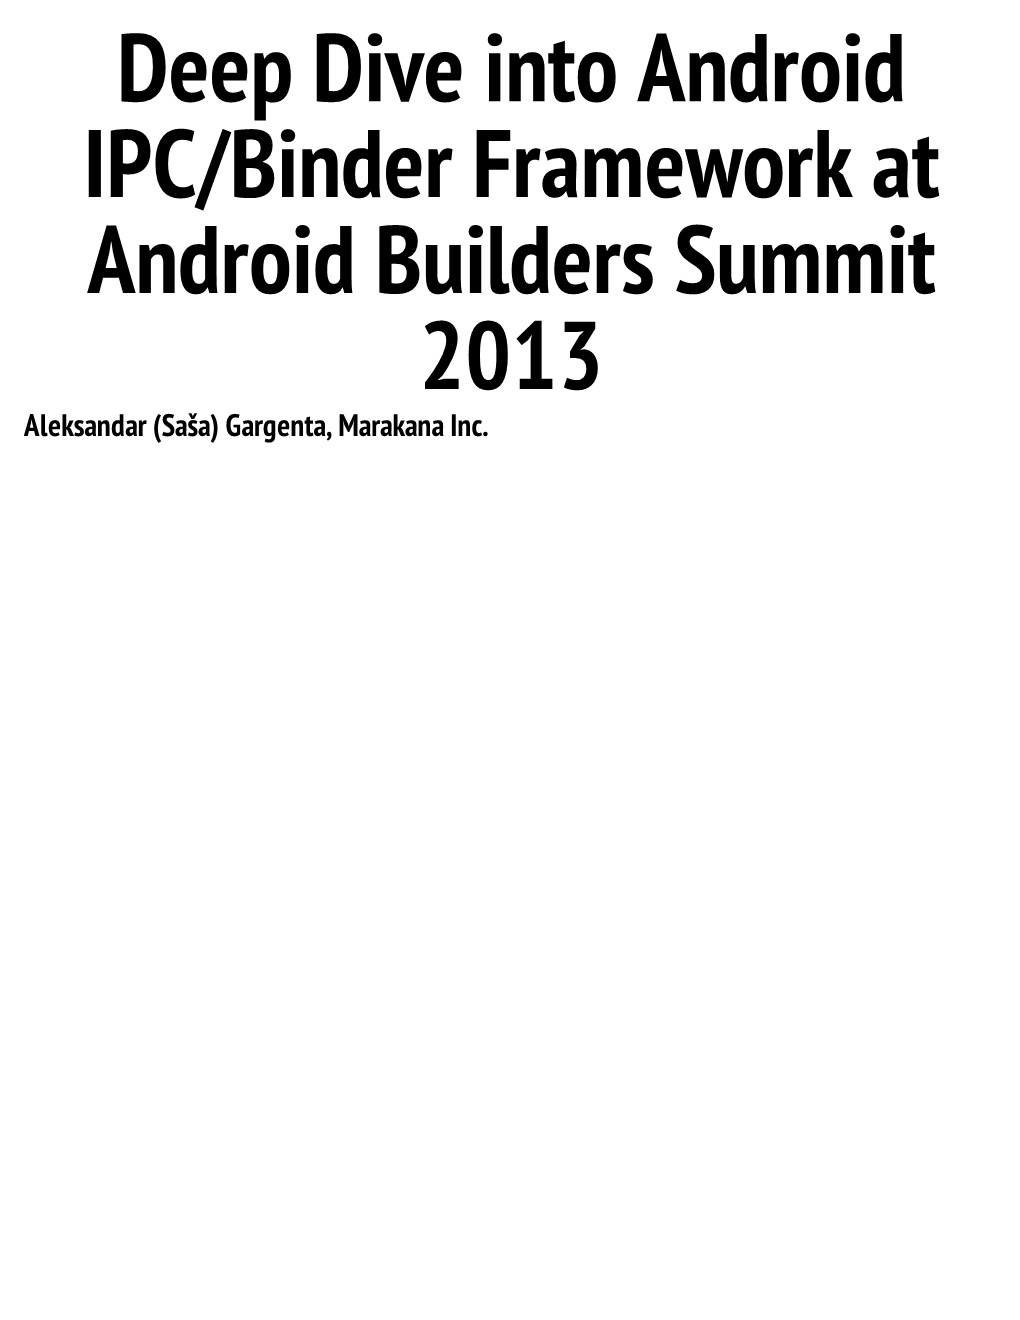 Deep Dive Into Android IPC/Binder Framework at Android Builders Summit 2013 Aleksandar (Saša) Gargenta, Marakana Inc